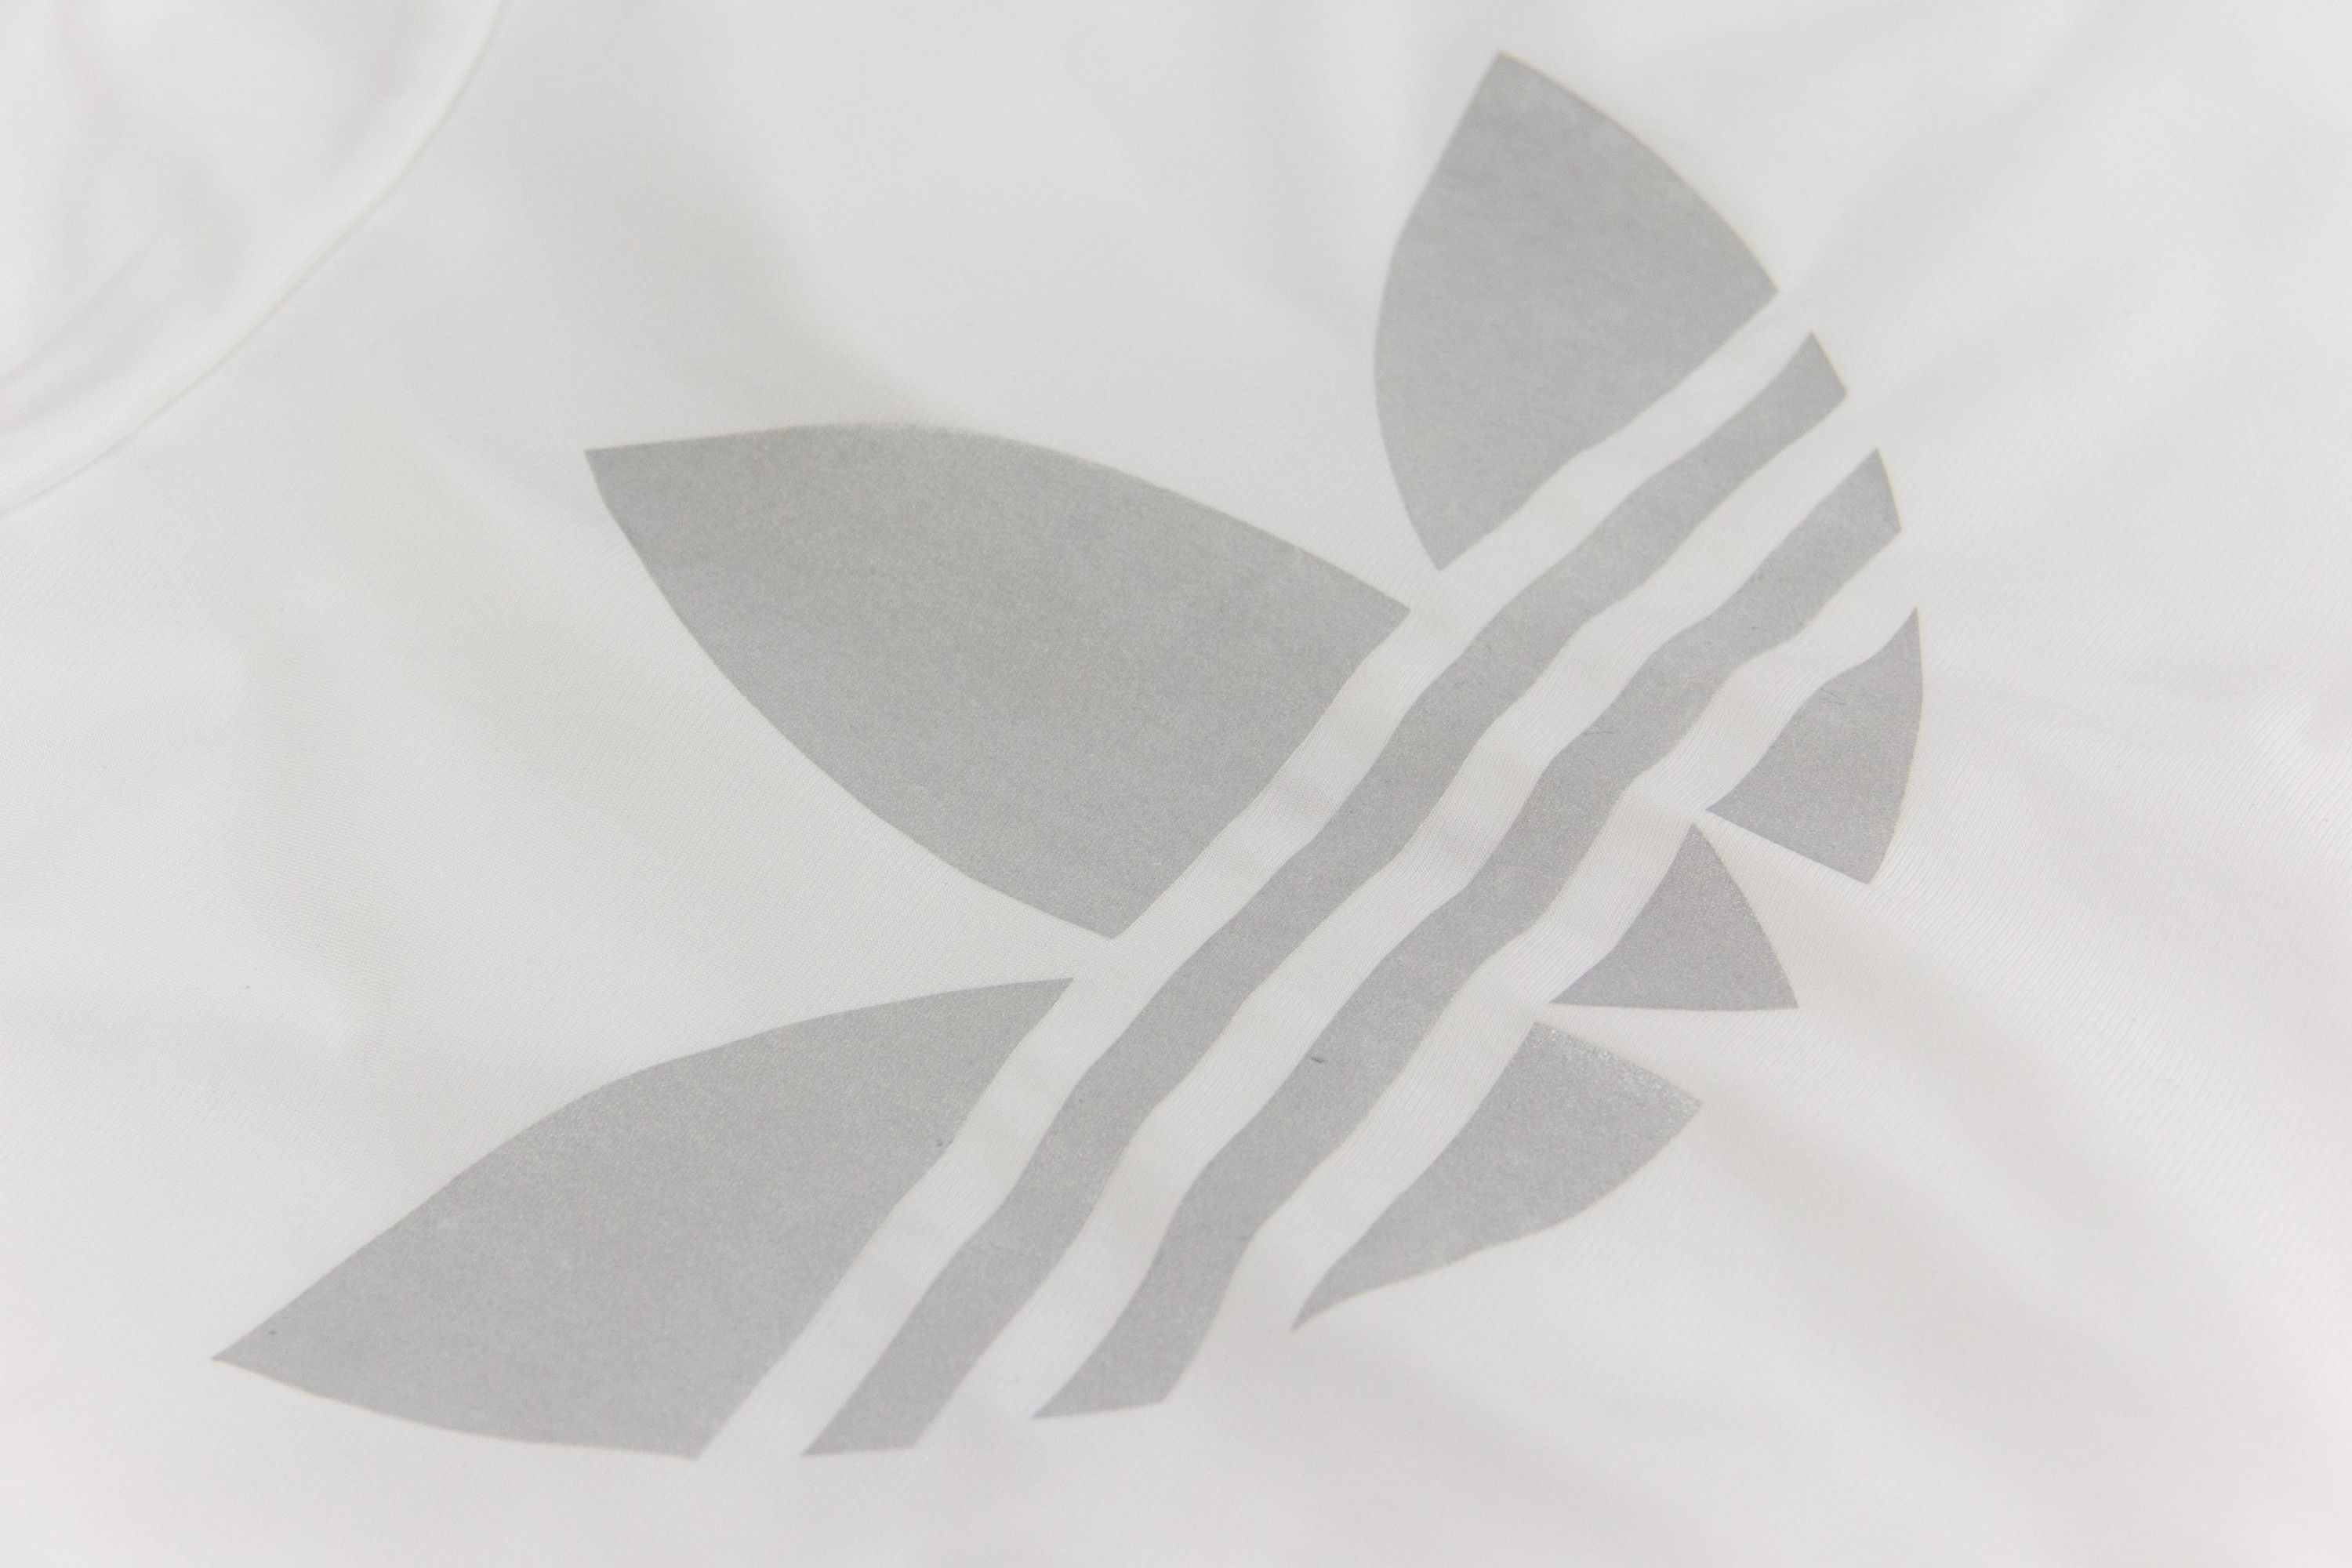 Adidas Adidas Originals White Track Jacket with Silver Stripes, Size M Size US M / EU 48-50 / 2 - 7 Thumbnail